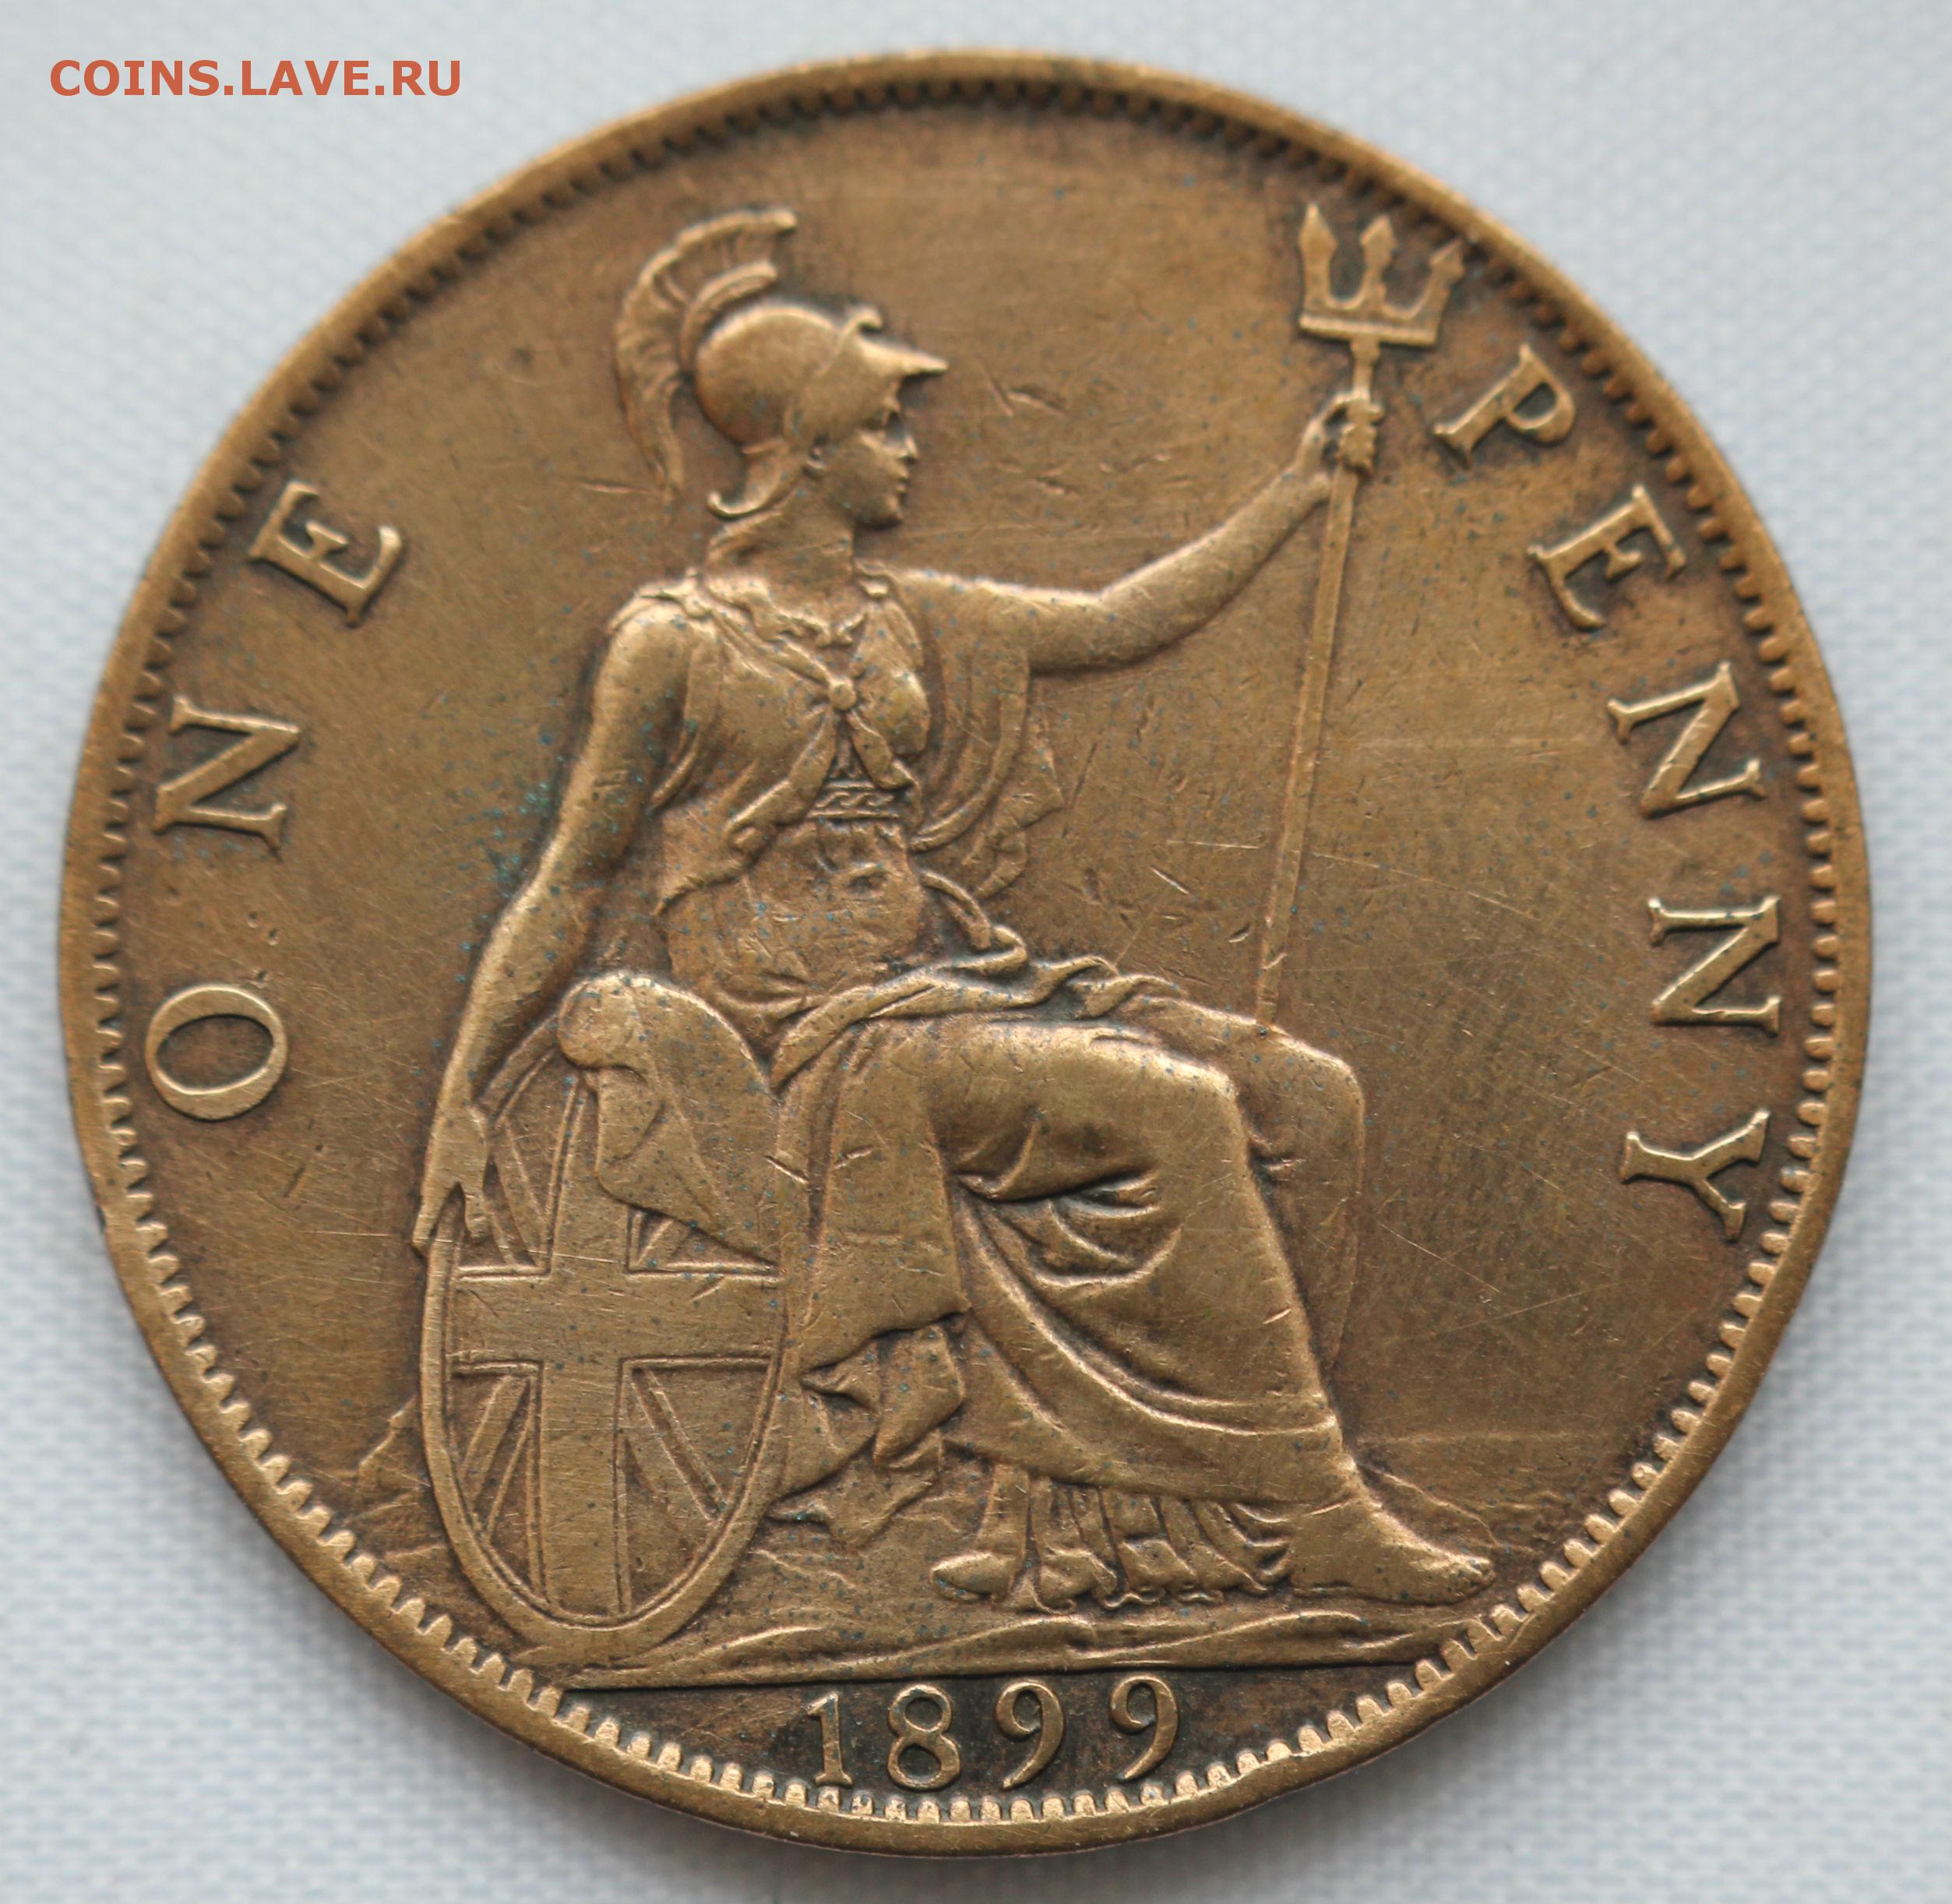 First coins. 1 Оне пенни монета. Пенни монета Великобритании. Великобритания 1 пенни 1947. Англия монеты Пенс.